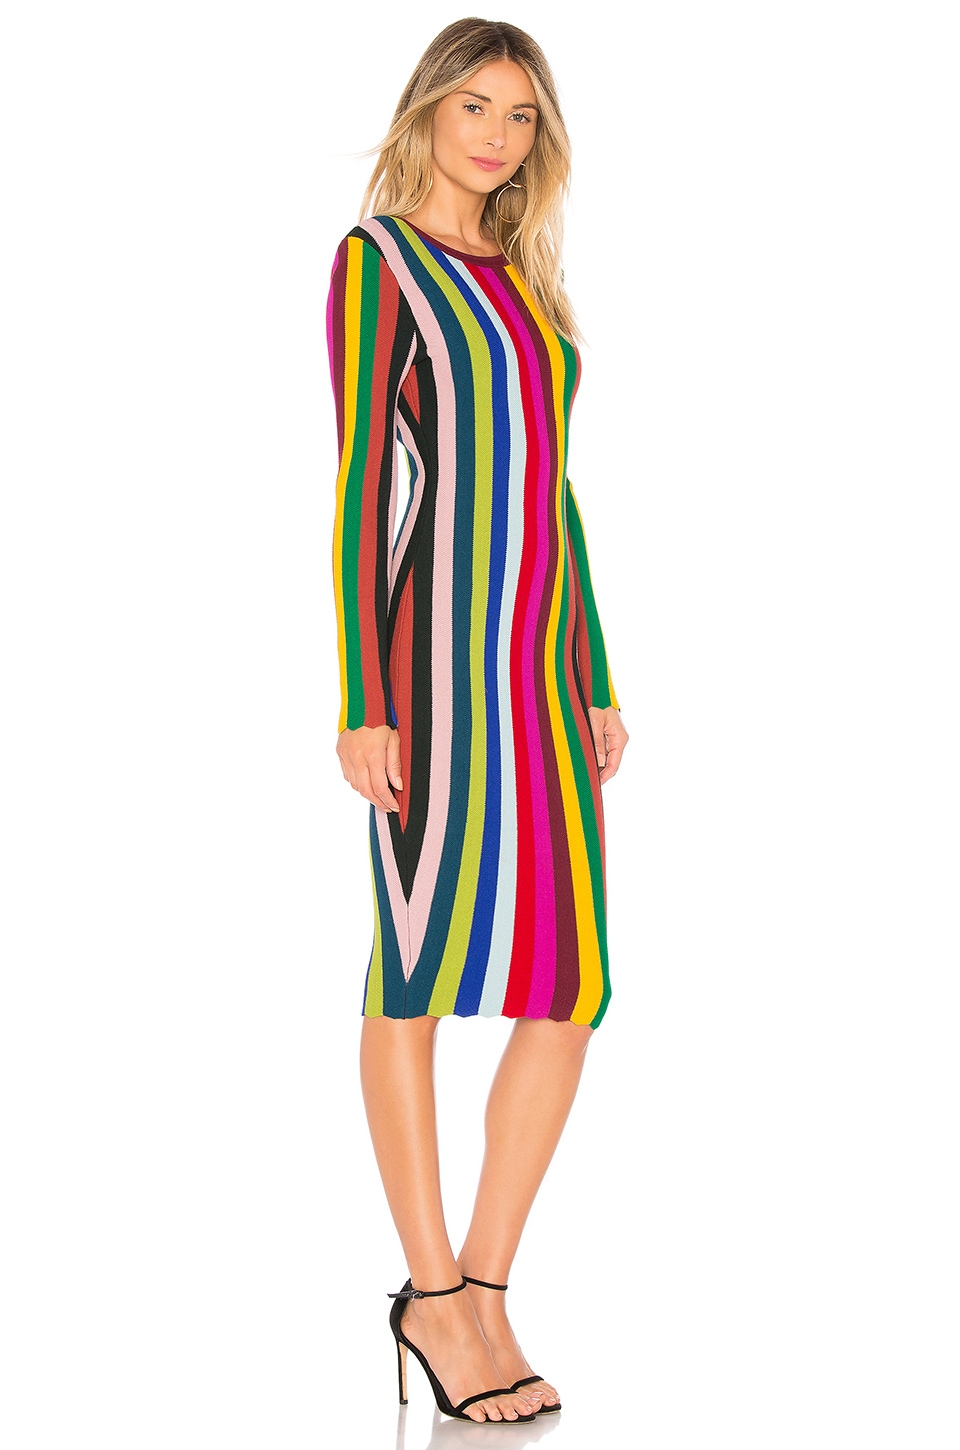 MILLY Chevron Vertical Stripe Dress in Rainbow Multi | REVOLVE